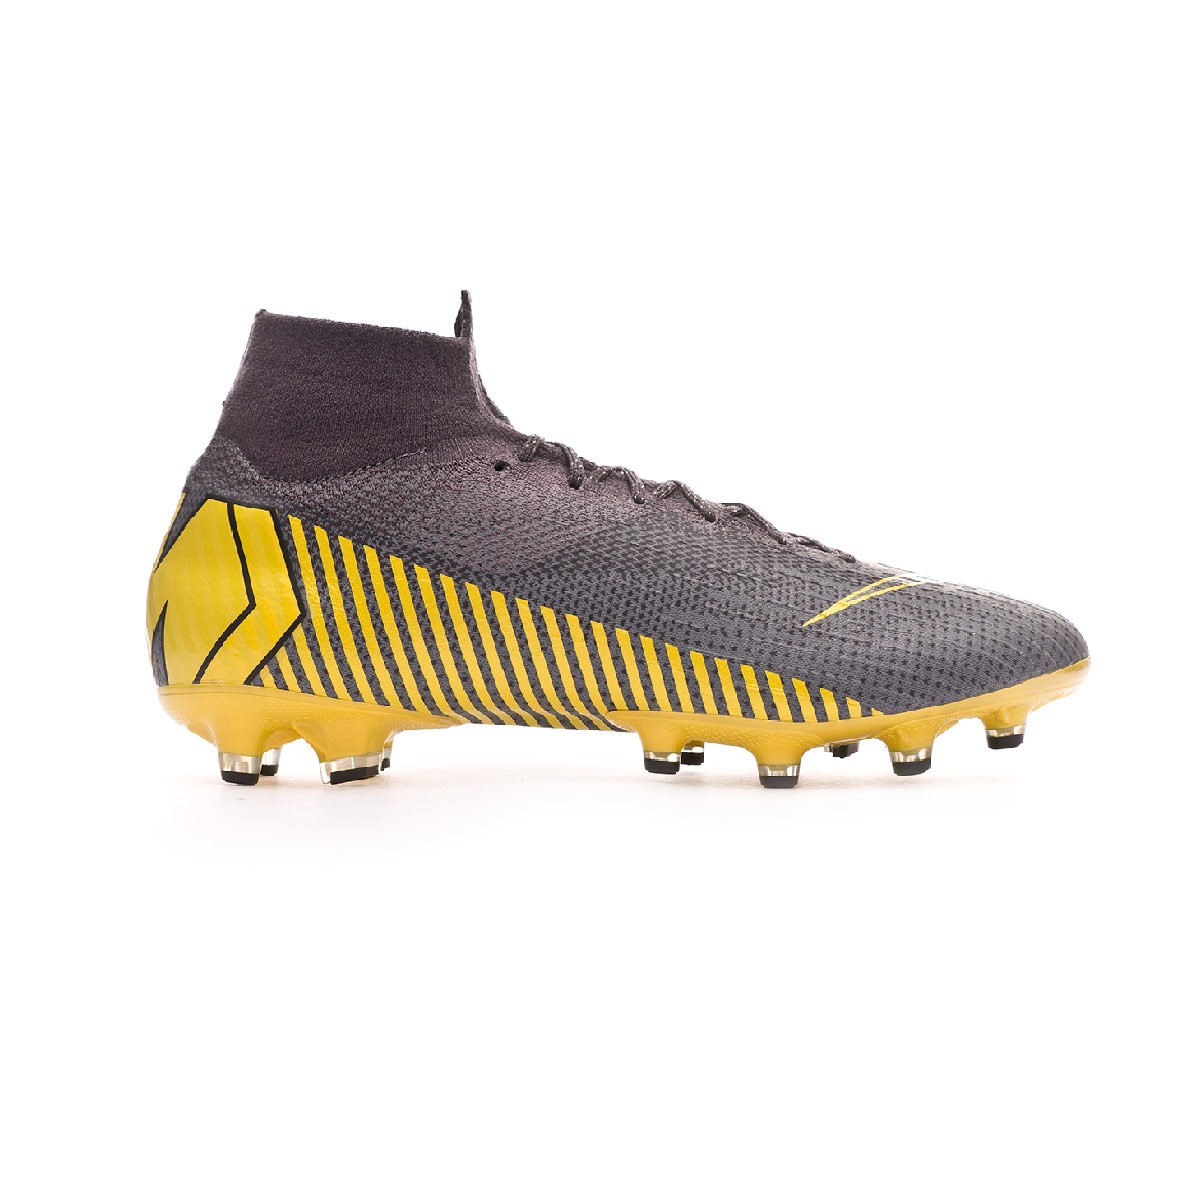 nike mercurial superfly 360 elite football boots